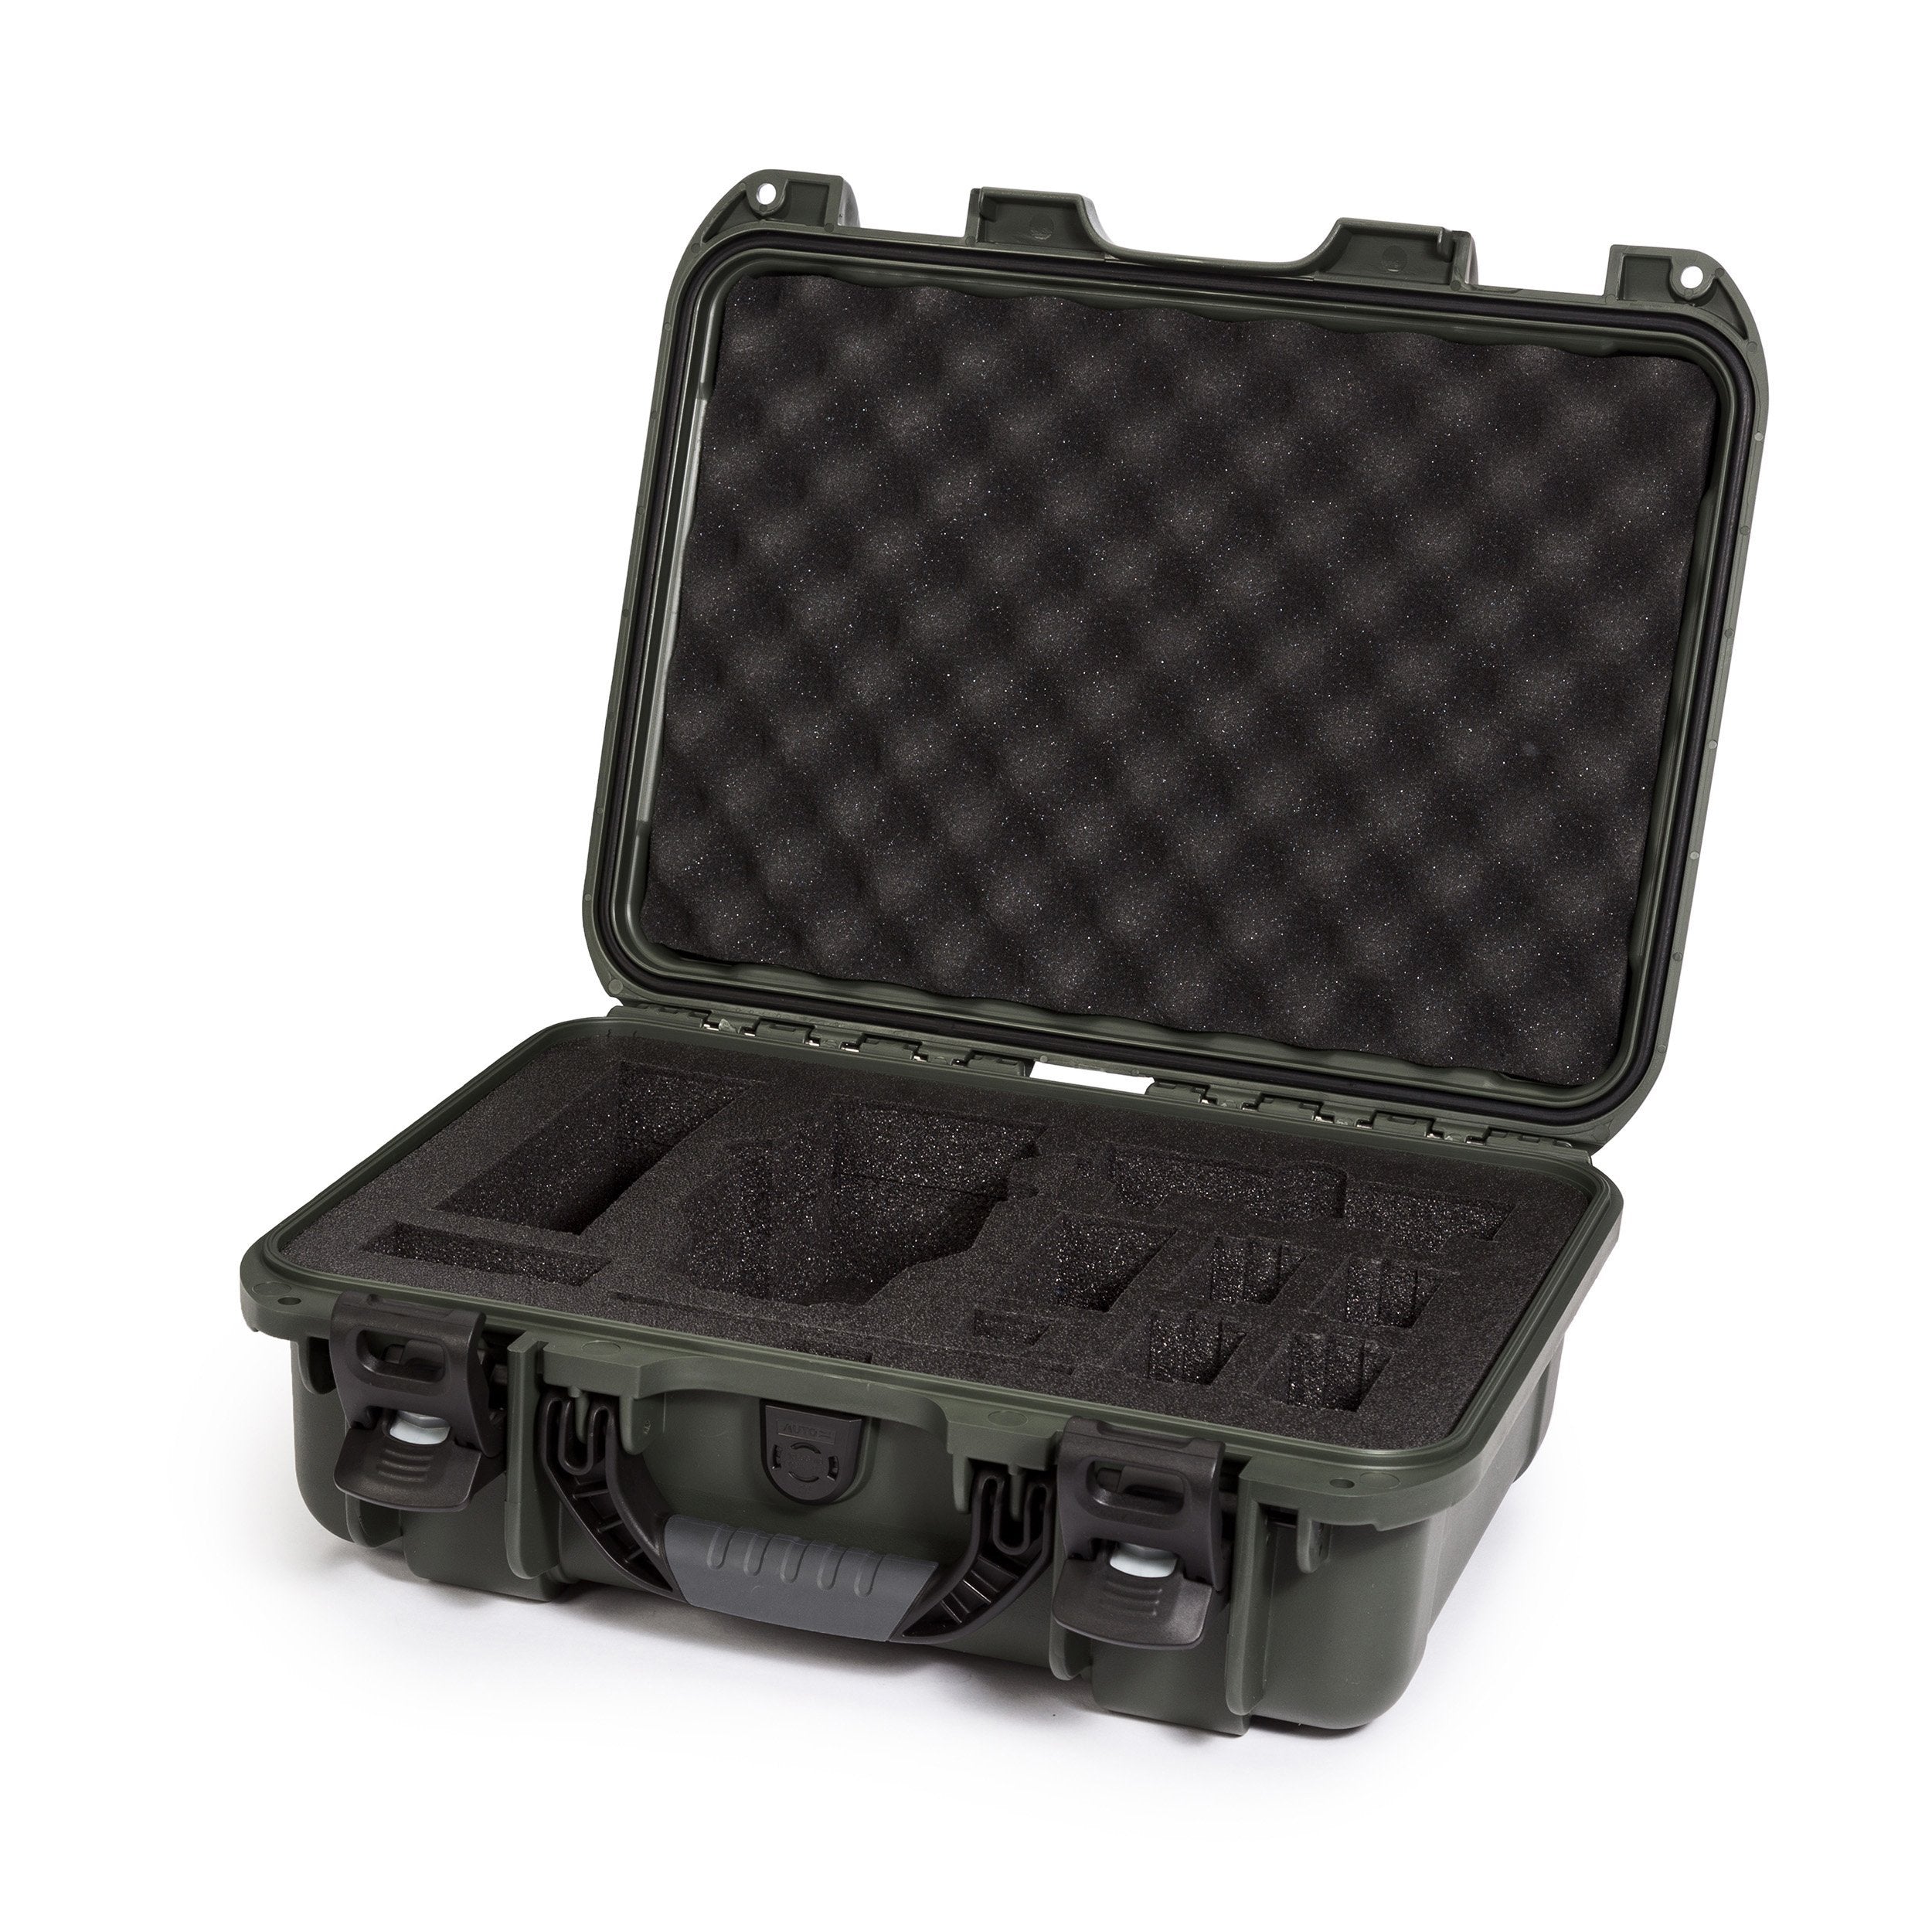 Nanuk DJI Drone Waterproof Hard Case with Custom Foam Insert for DJI Mavic PRO - Olive